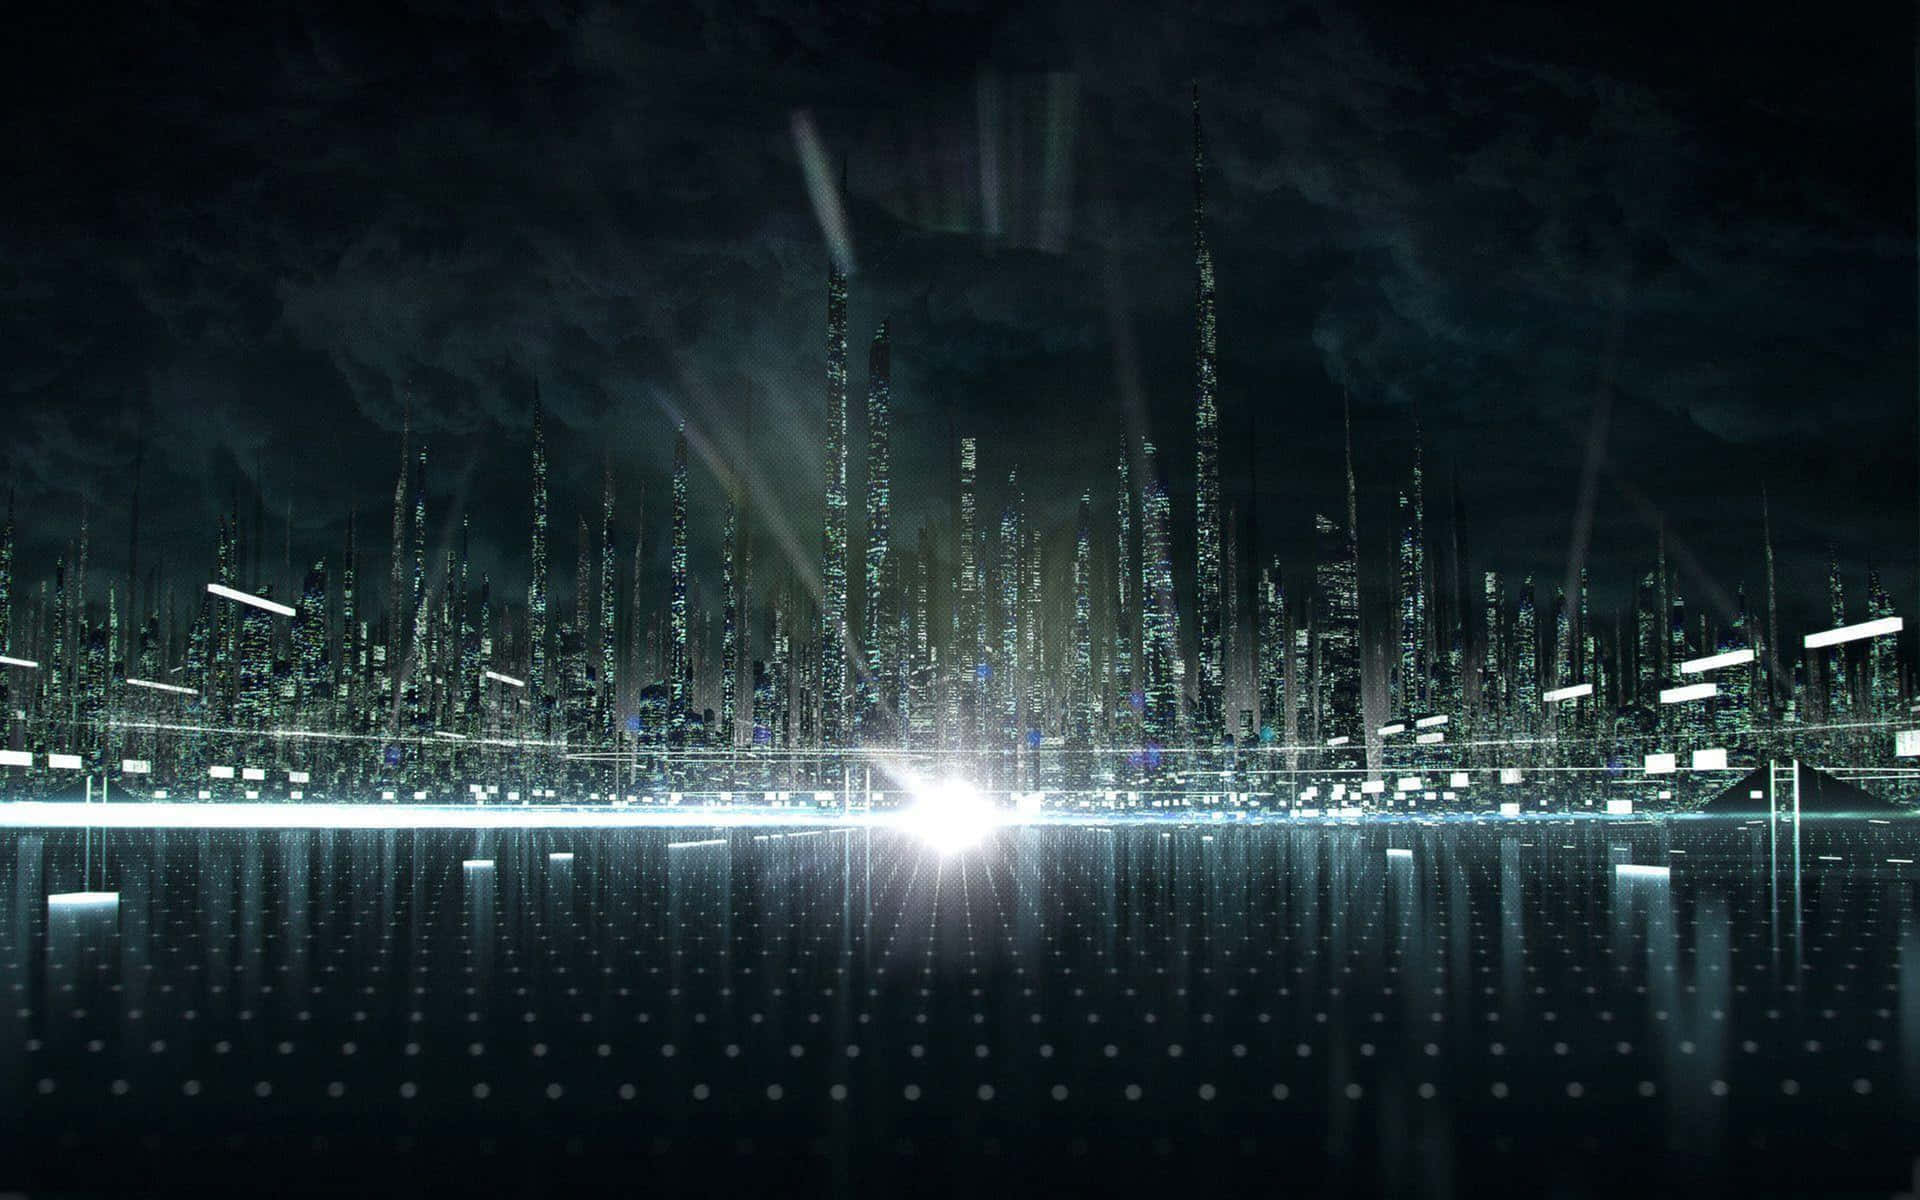 Trondigital City 4k: Tron Digital City 4k. Wallpaper